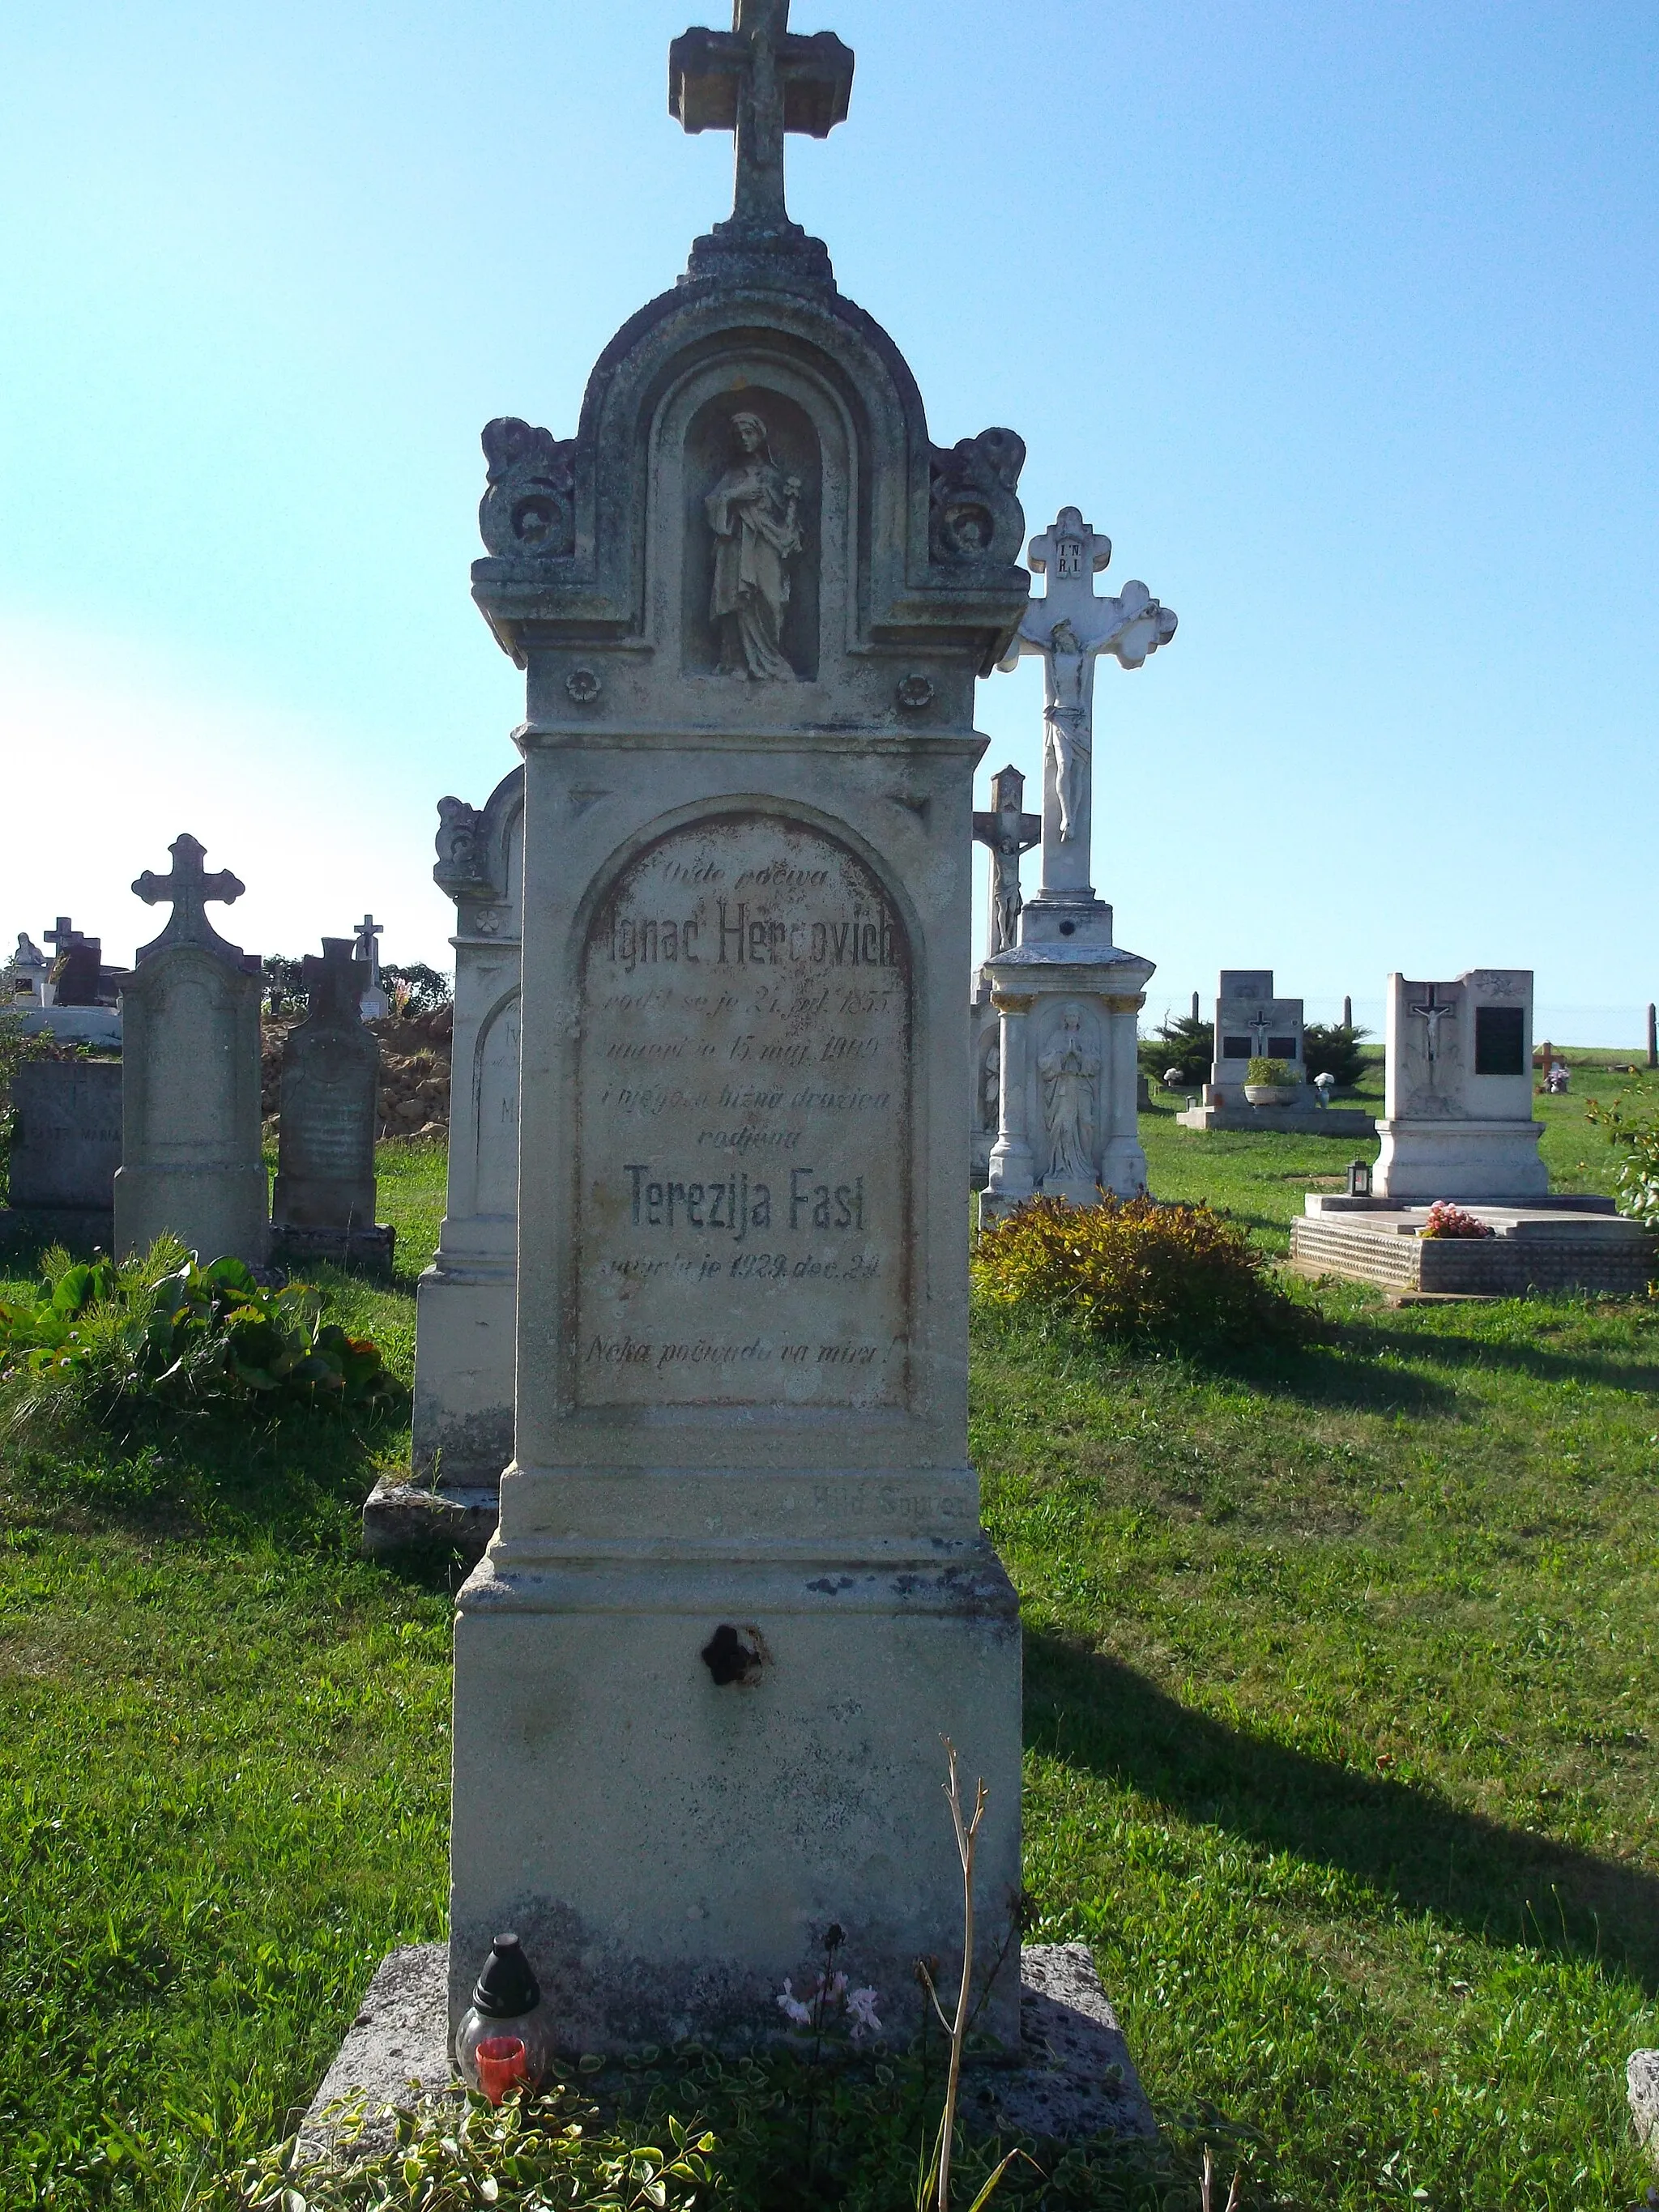 Photo showing: The gravestone of Ignác Hergovich and Terézia Faszl in the Ólmod Cemetery with Burgenland Croatian inscription.